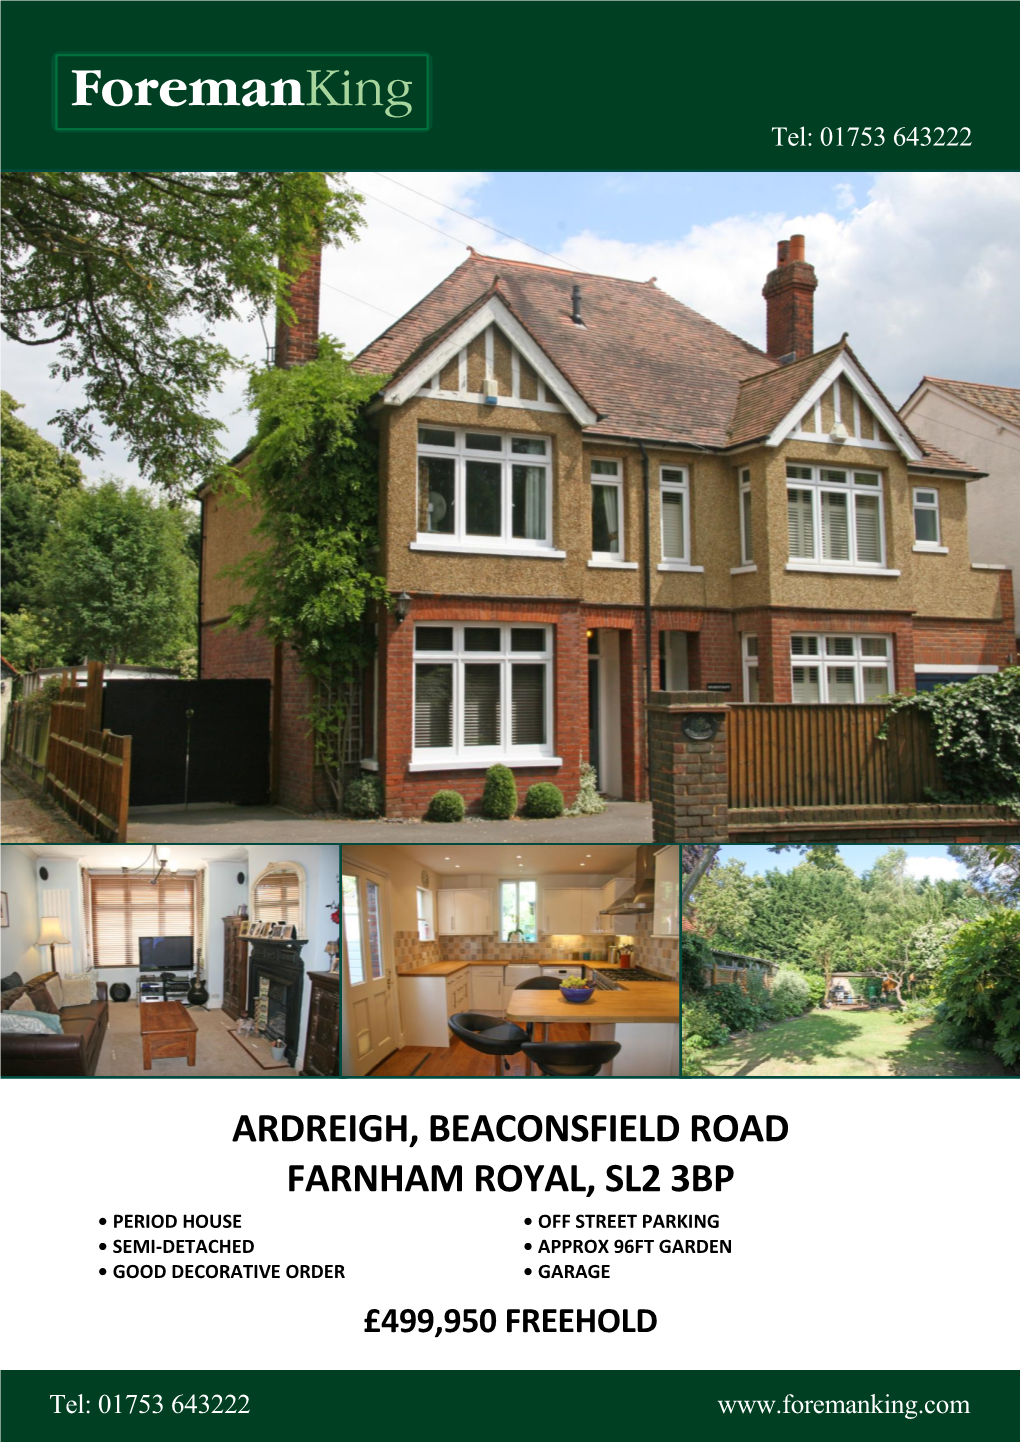 Ardreigh, Beaconsfield Road Farnham Royal, Sl2 3Bp • Period House • Off Street Parking • Semi-Detached • Approx 96Ft Garden • Good Decorative Order • Garage